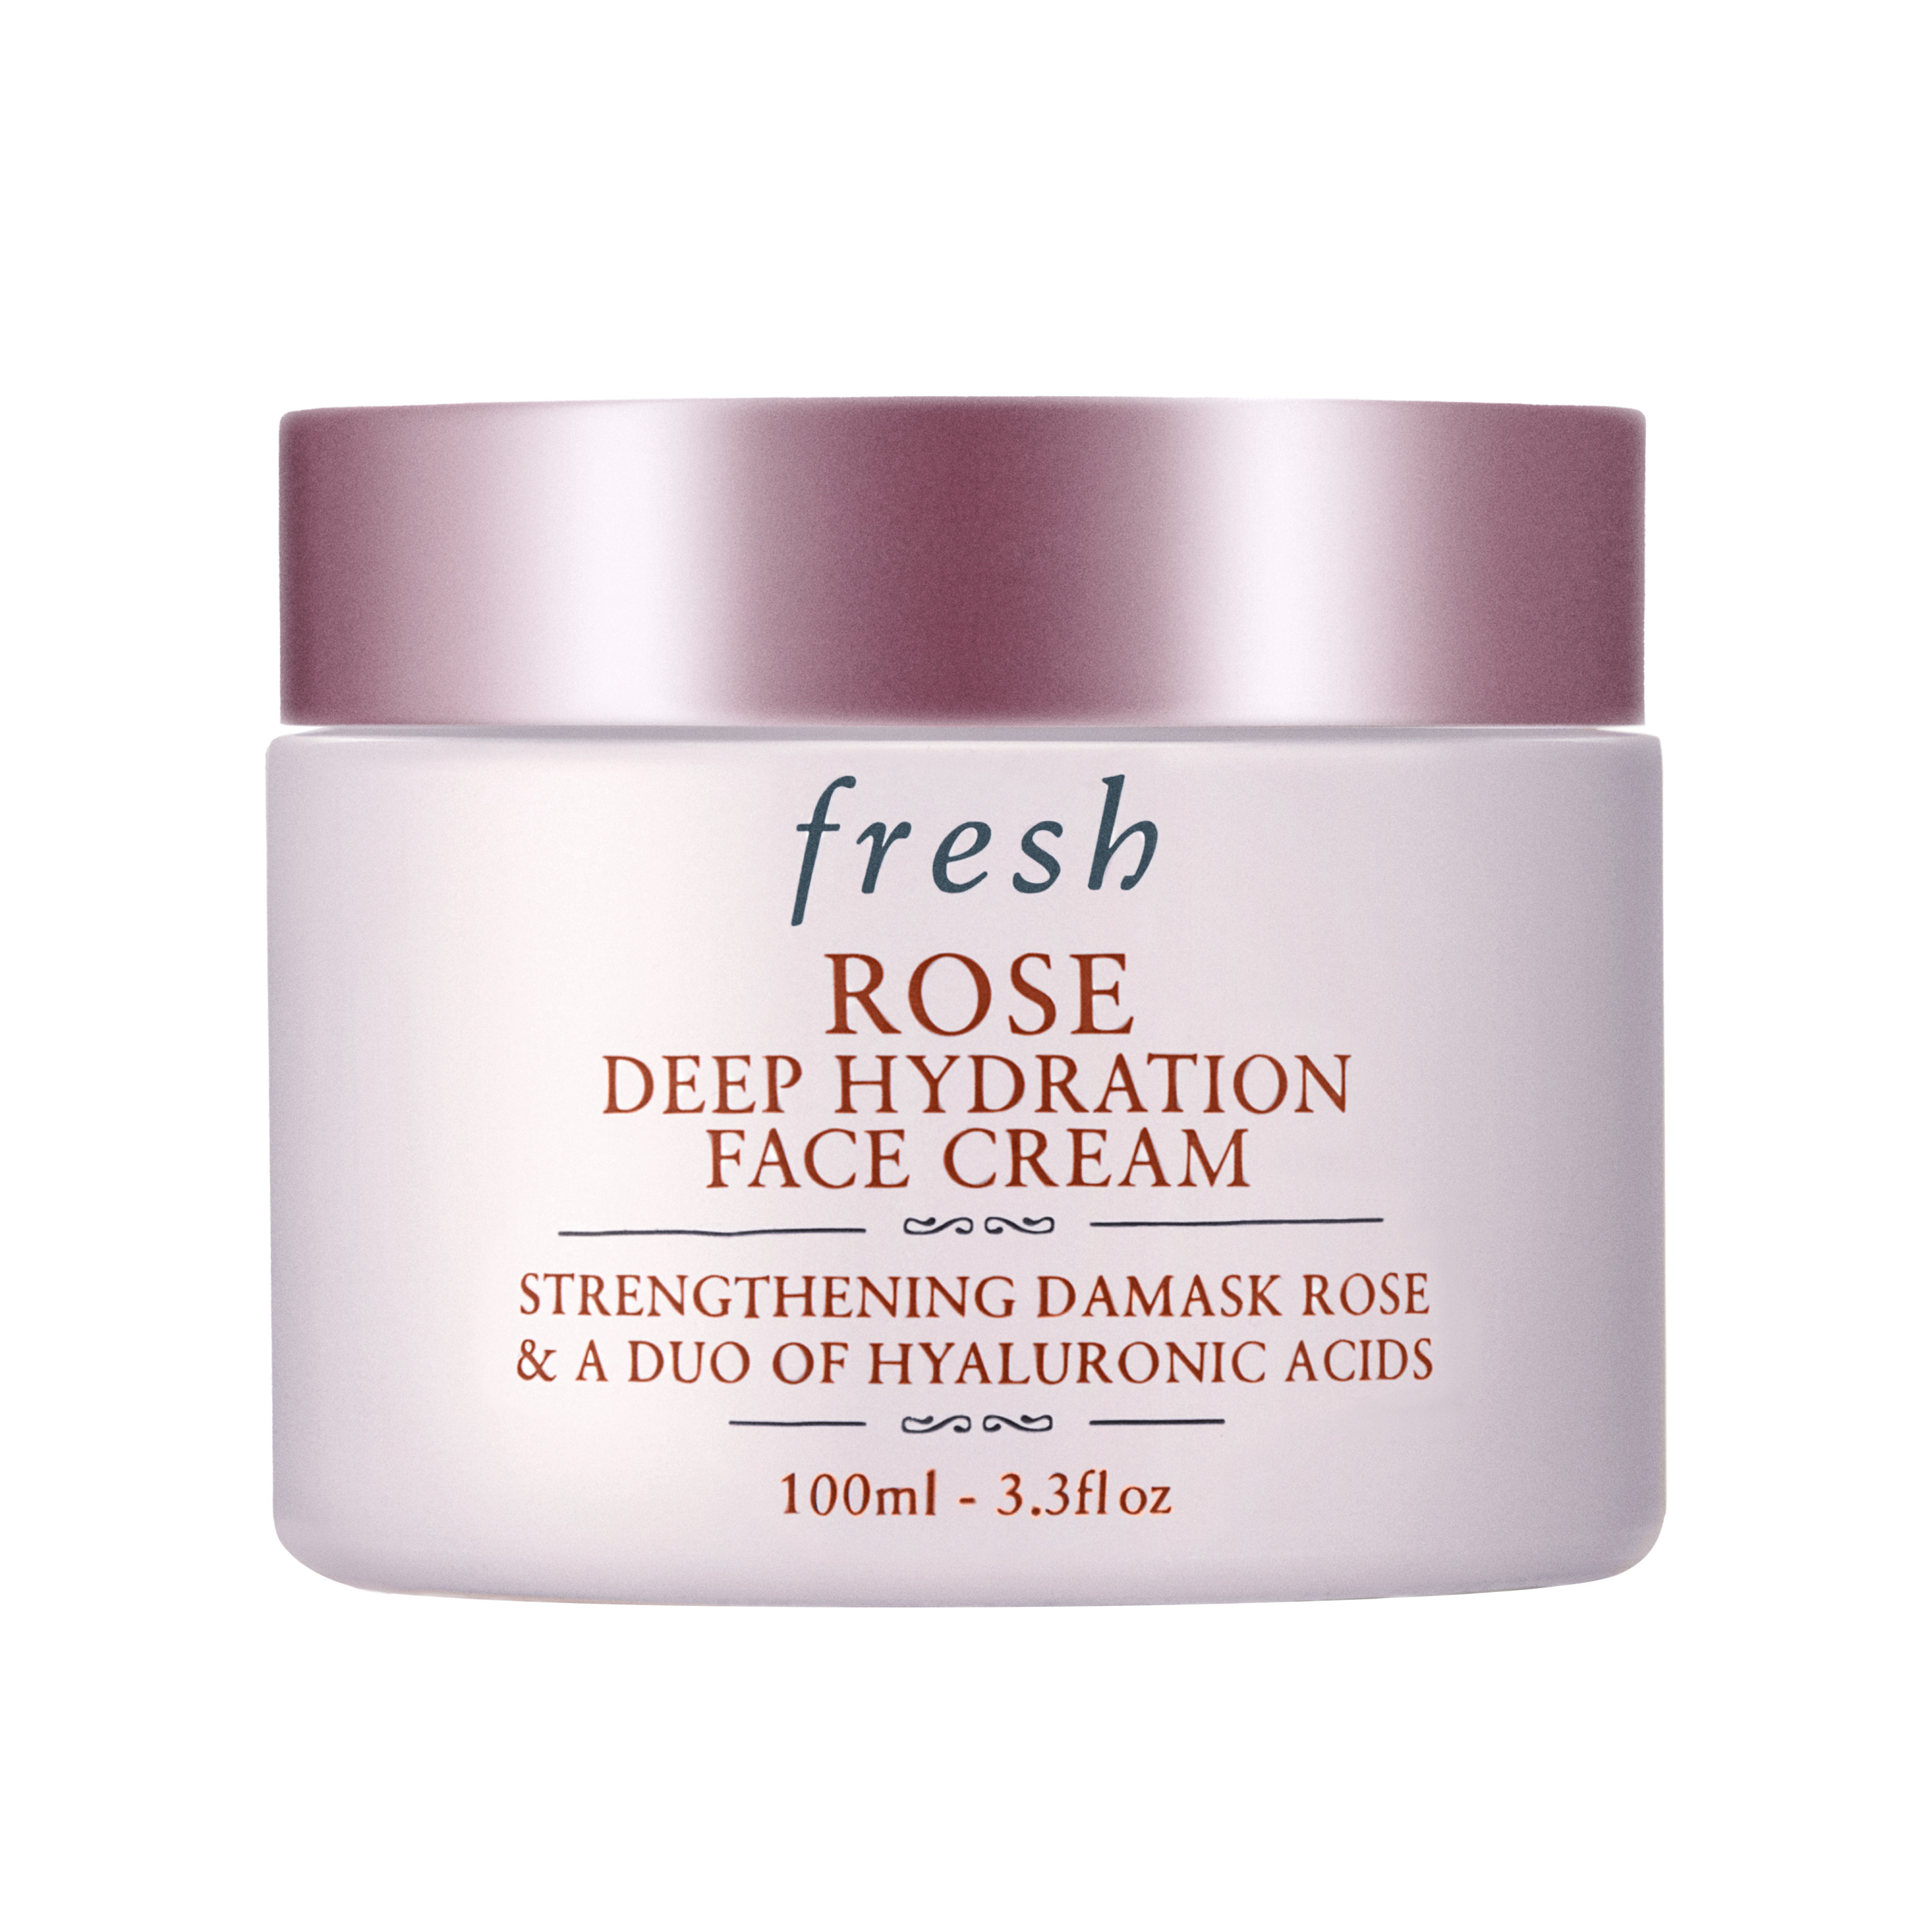 Fresh Rose Deep Hydration Face Cream | Space NK